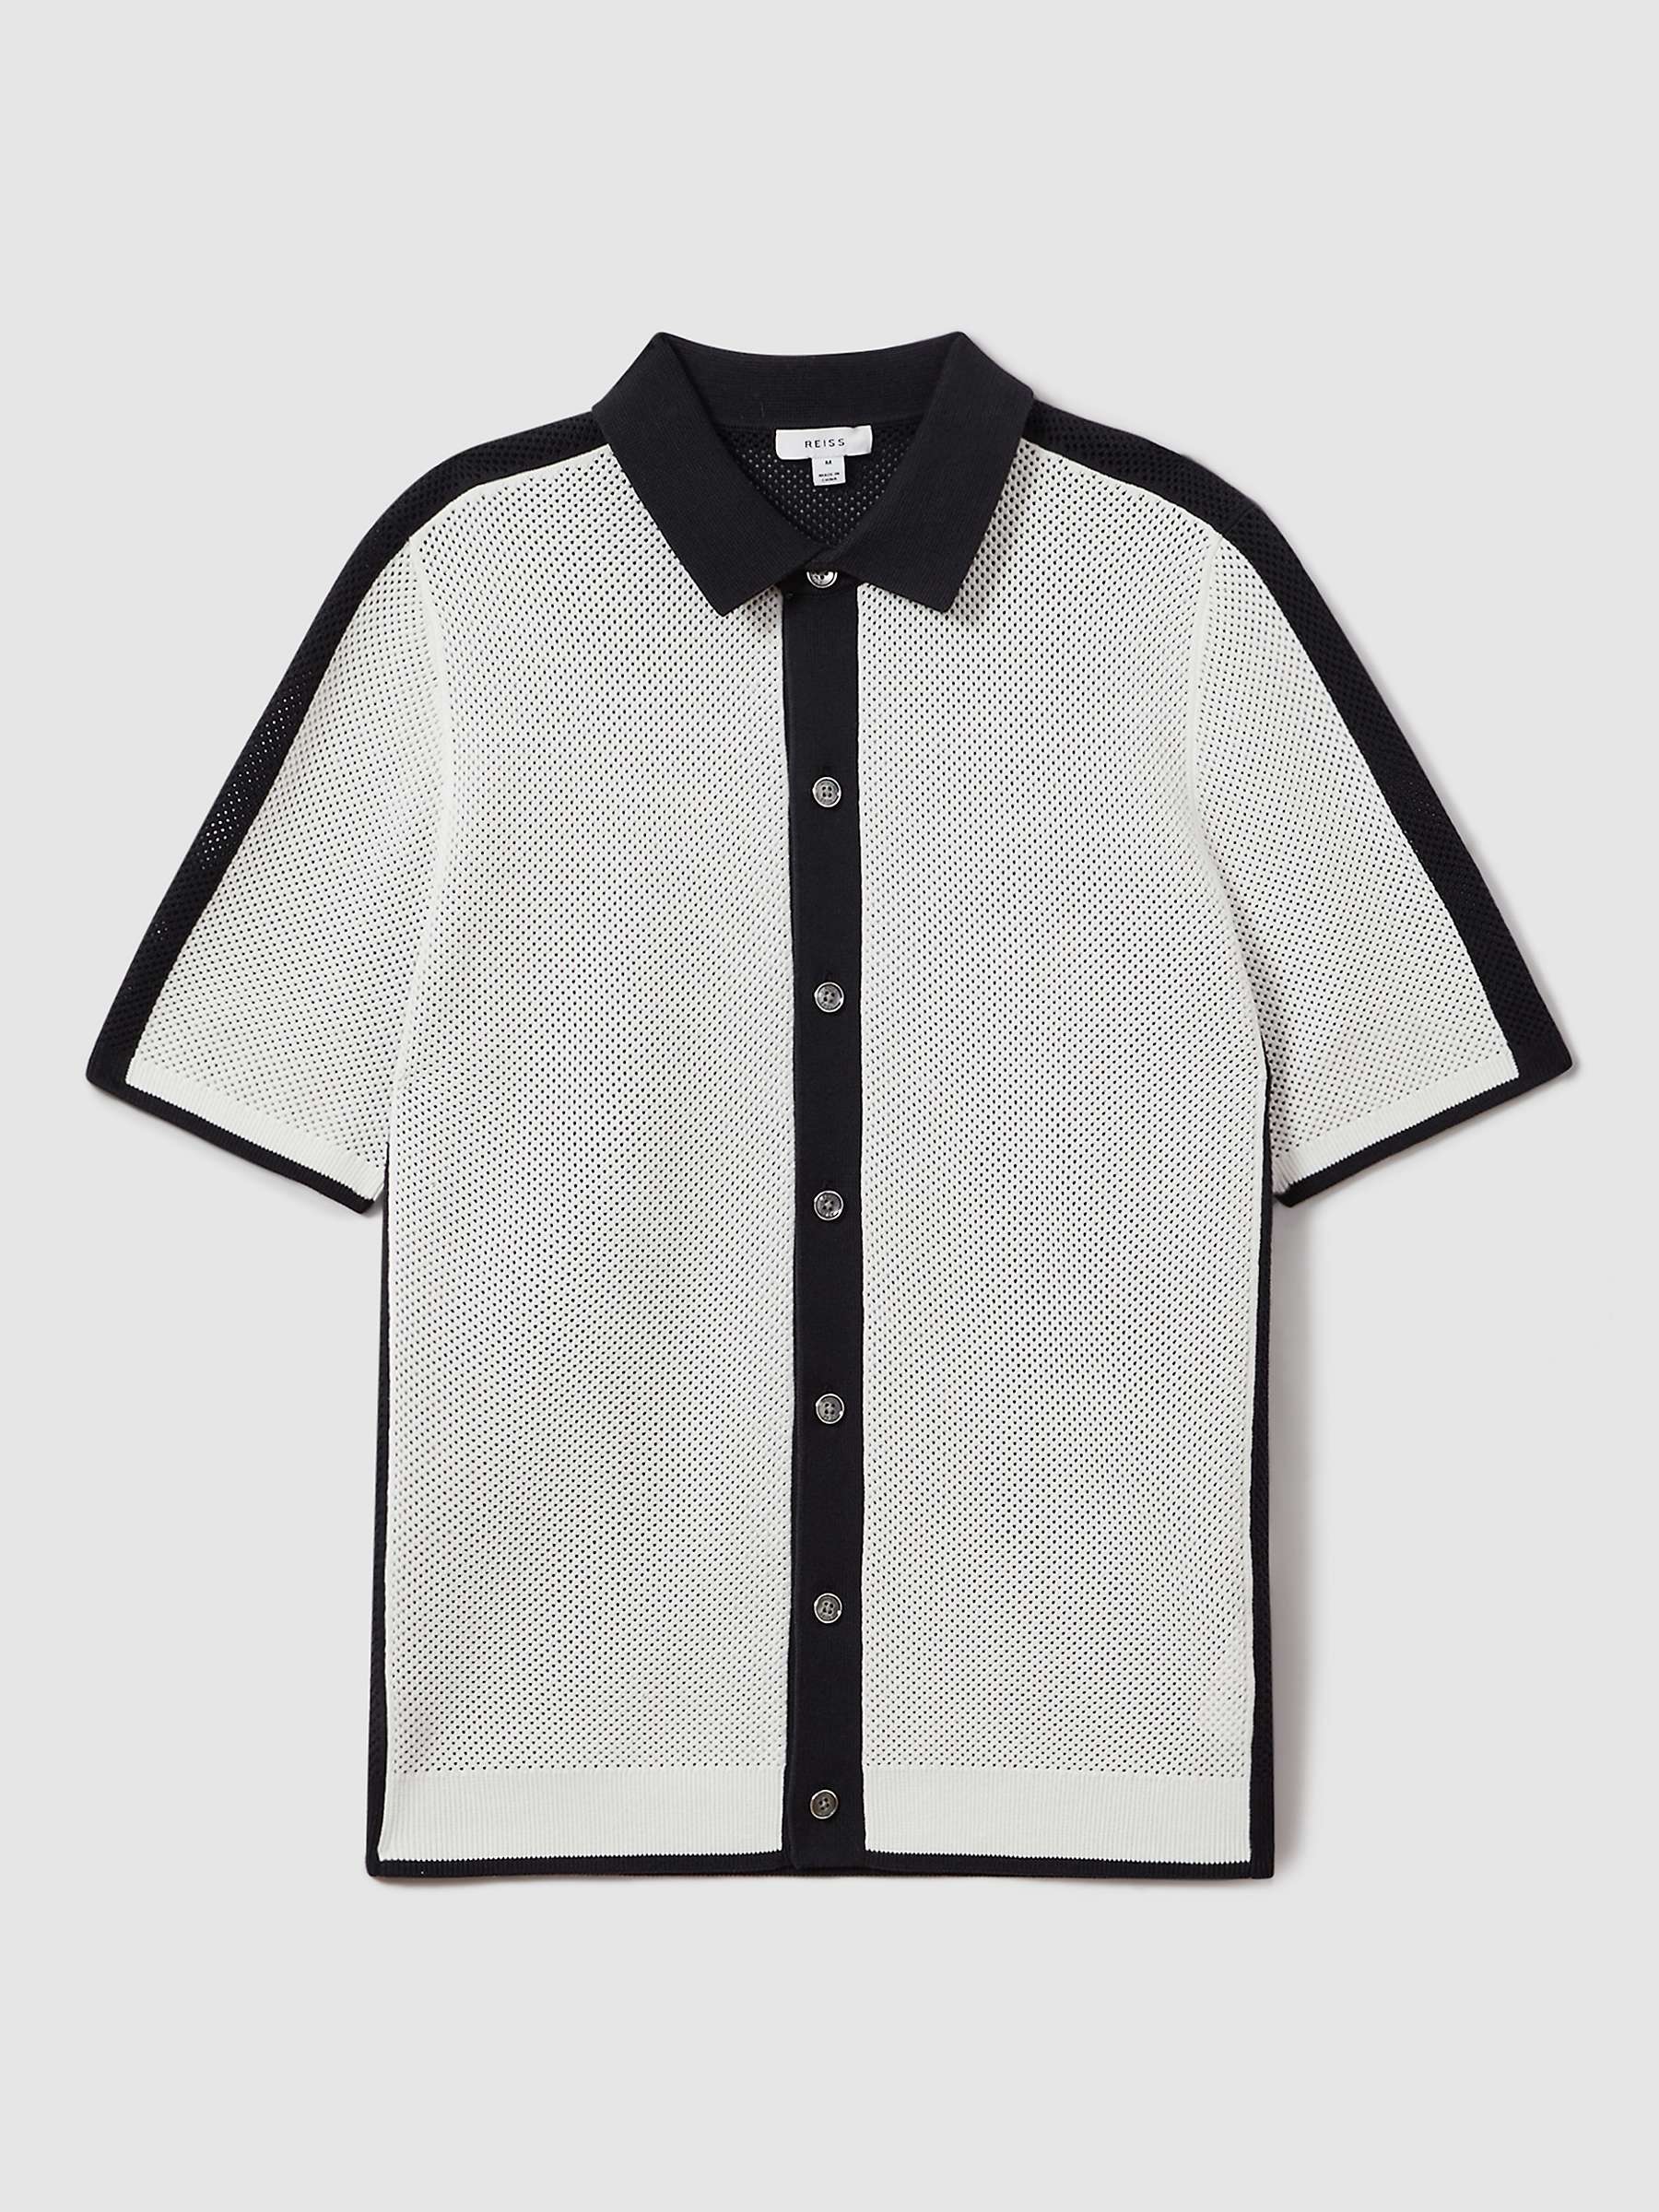 Buy Reiss Misto Colour Block Knitted Shirt, Navy/Optic White Online at johnlewis.com